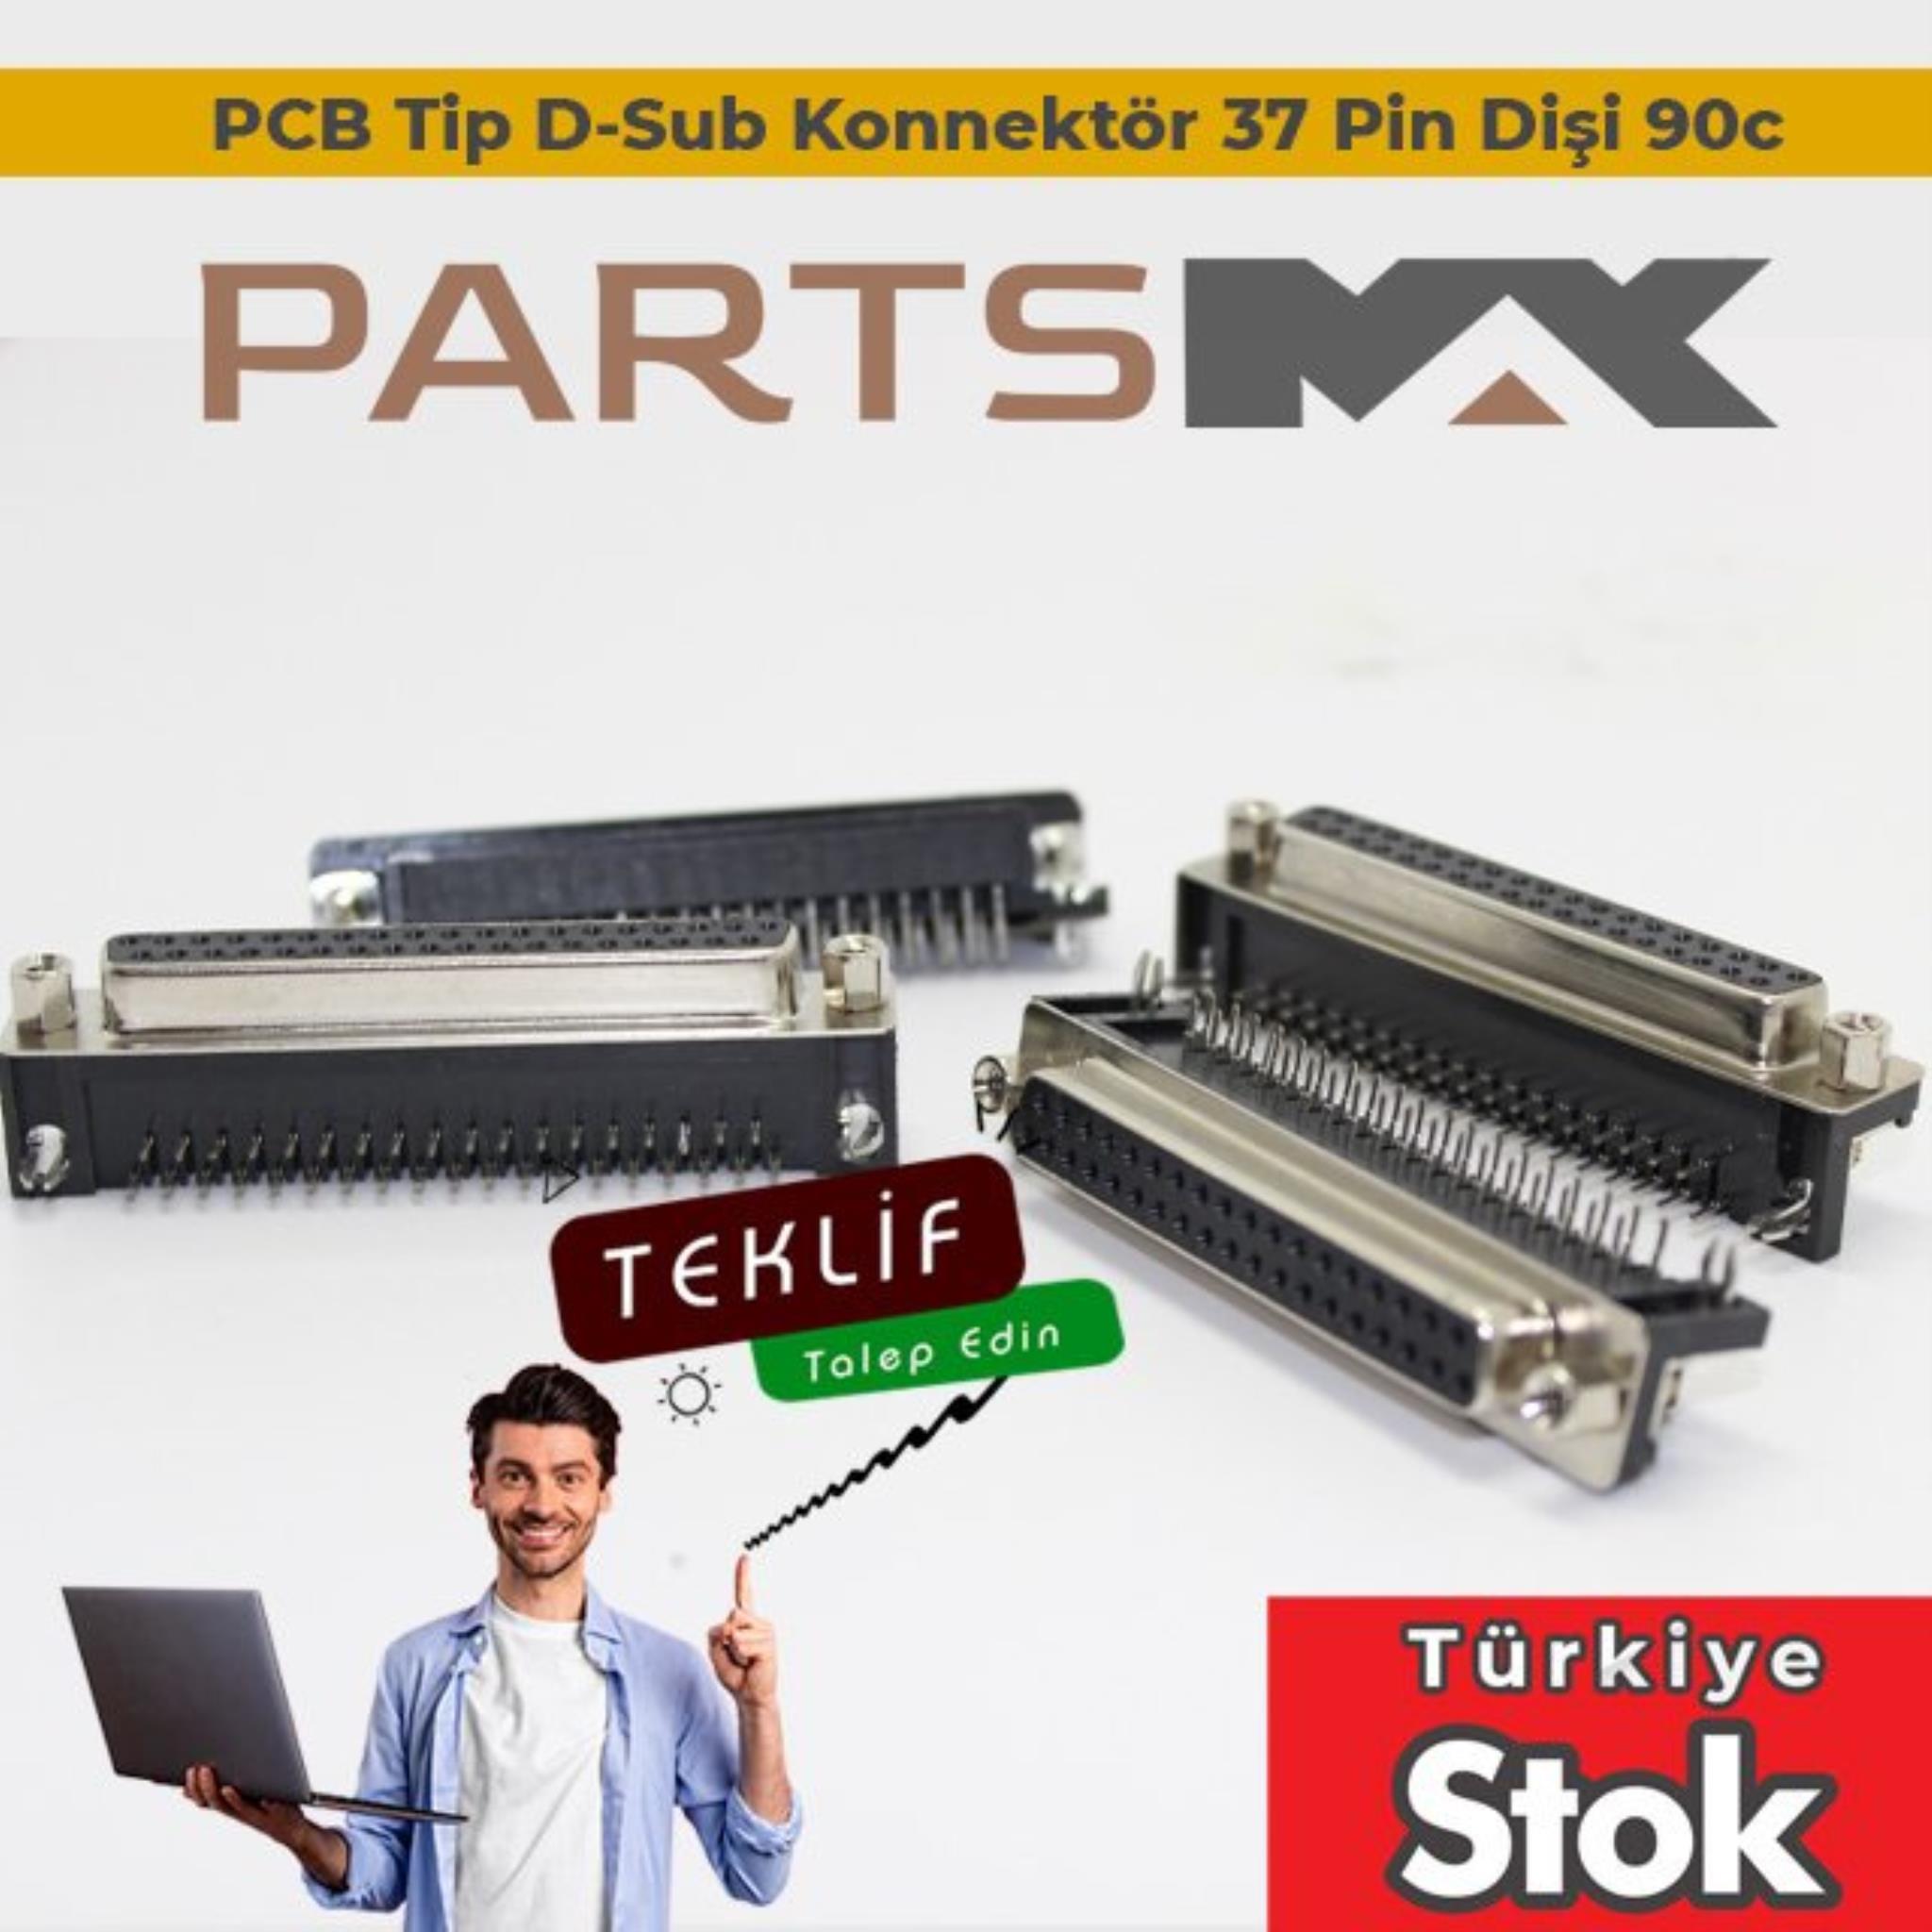 Picture of PCB Tip D-Sub Konnektör 37 Pin Dişi 90c | Partsmax Türkiye